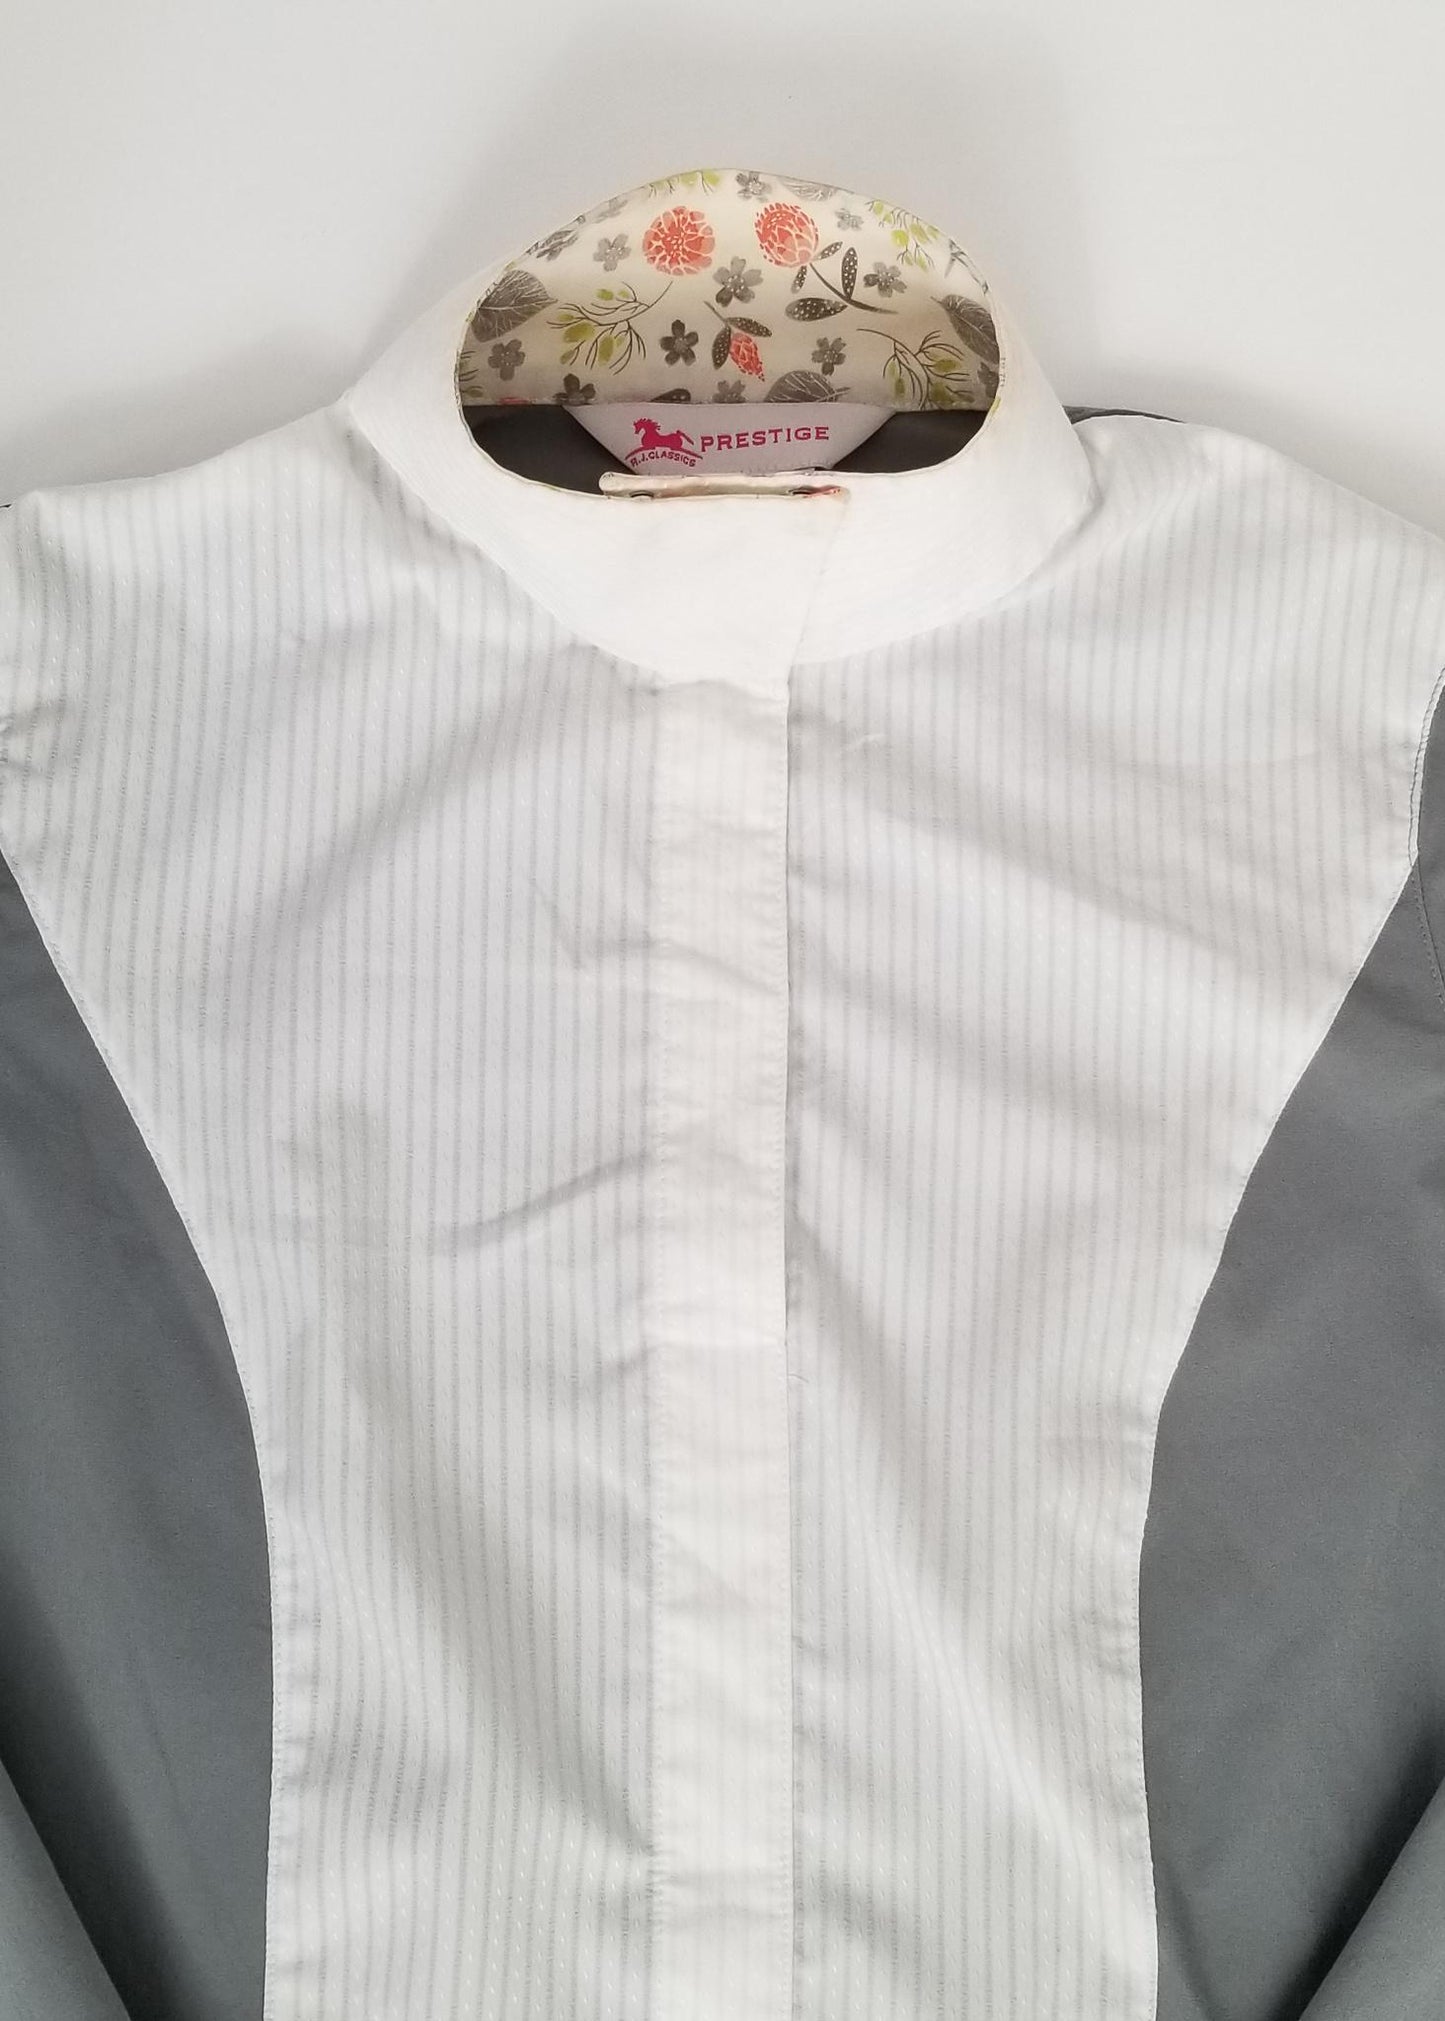 RJ Classics Prestige Collection Show Shirt - Grey & White - Women's Small